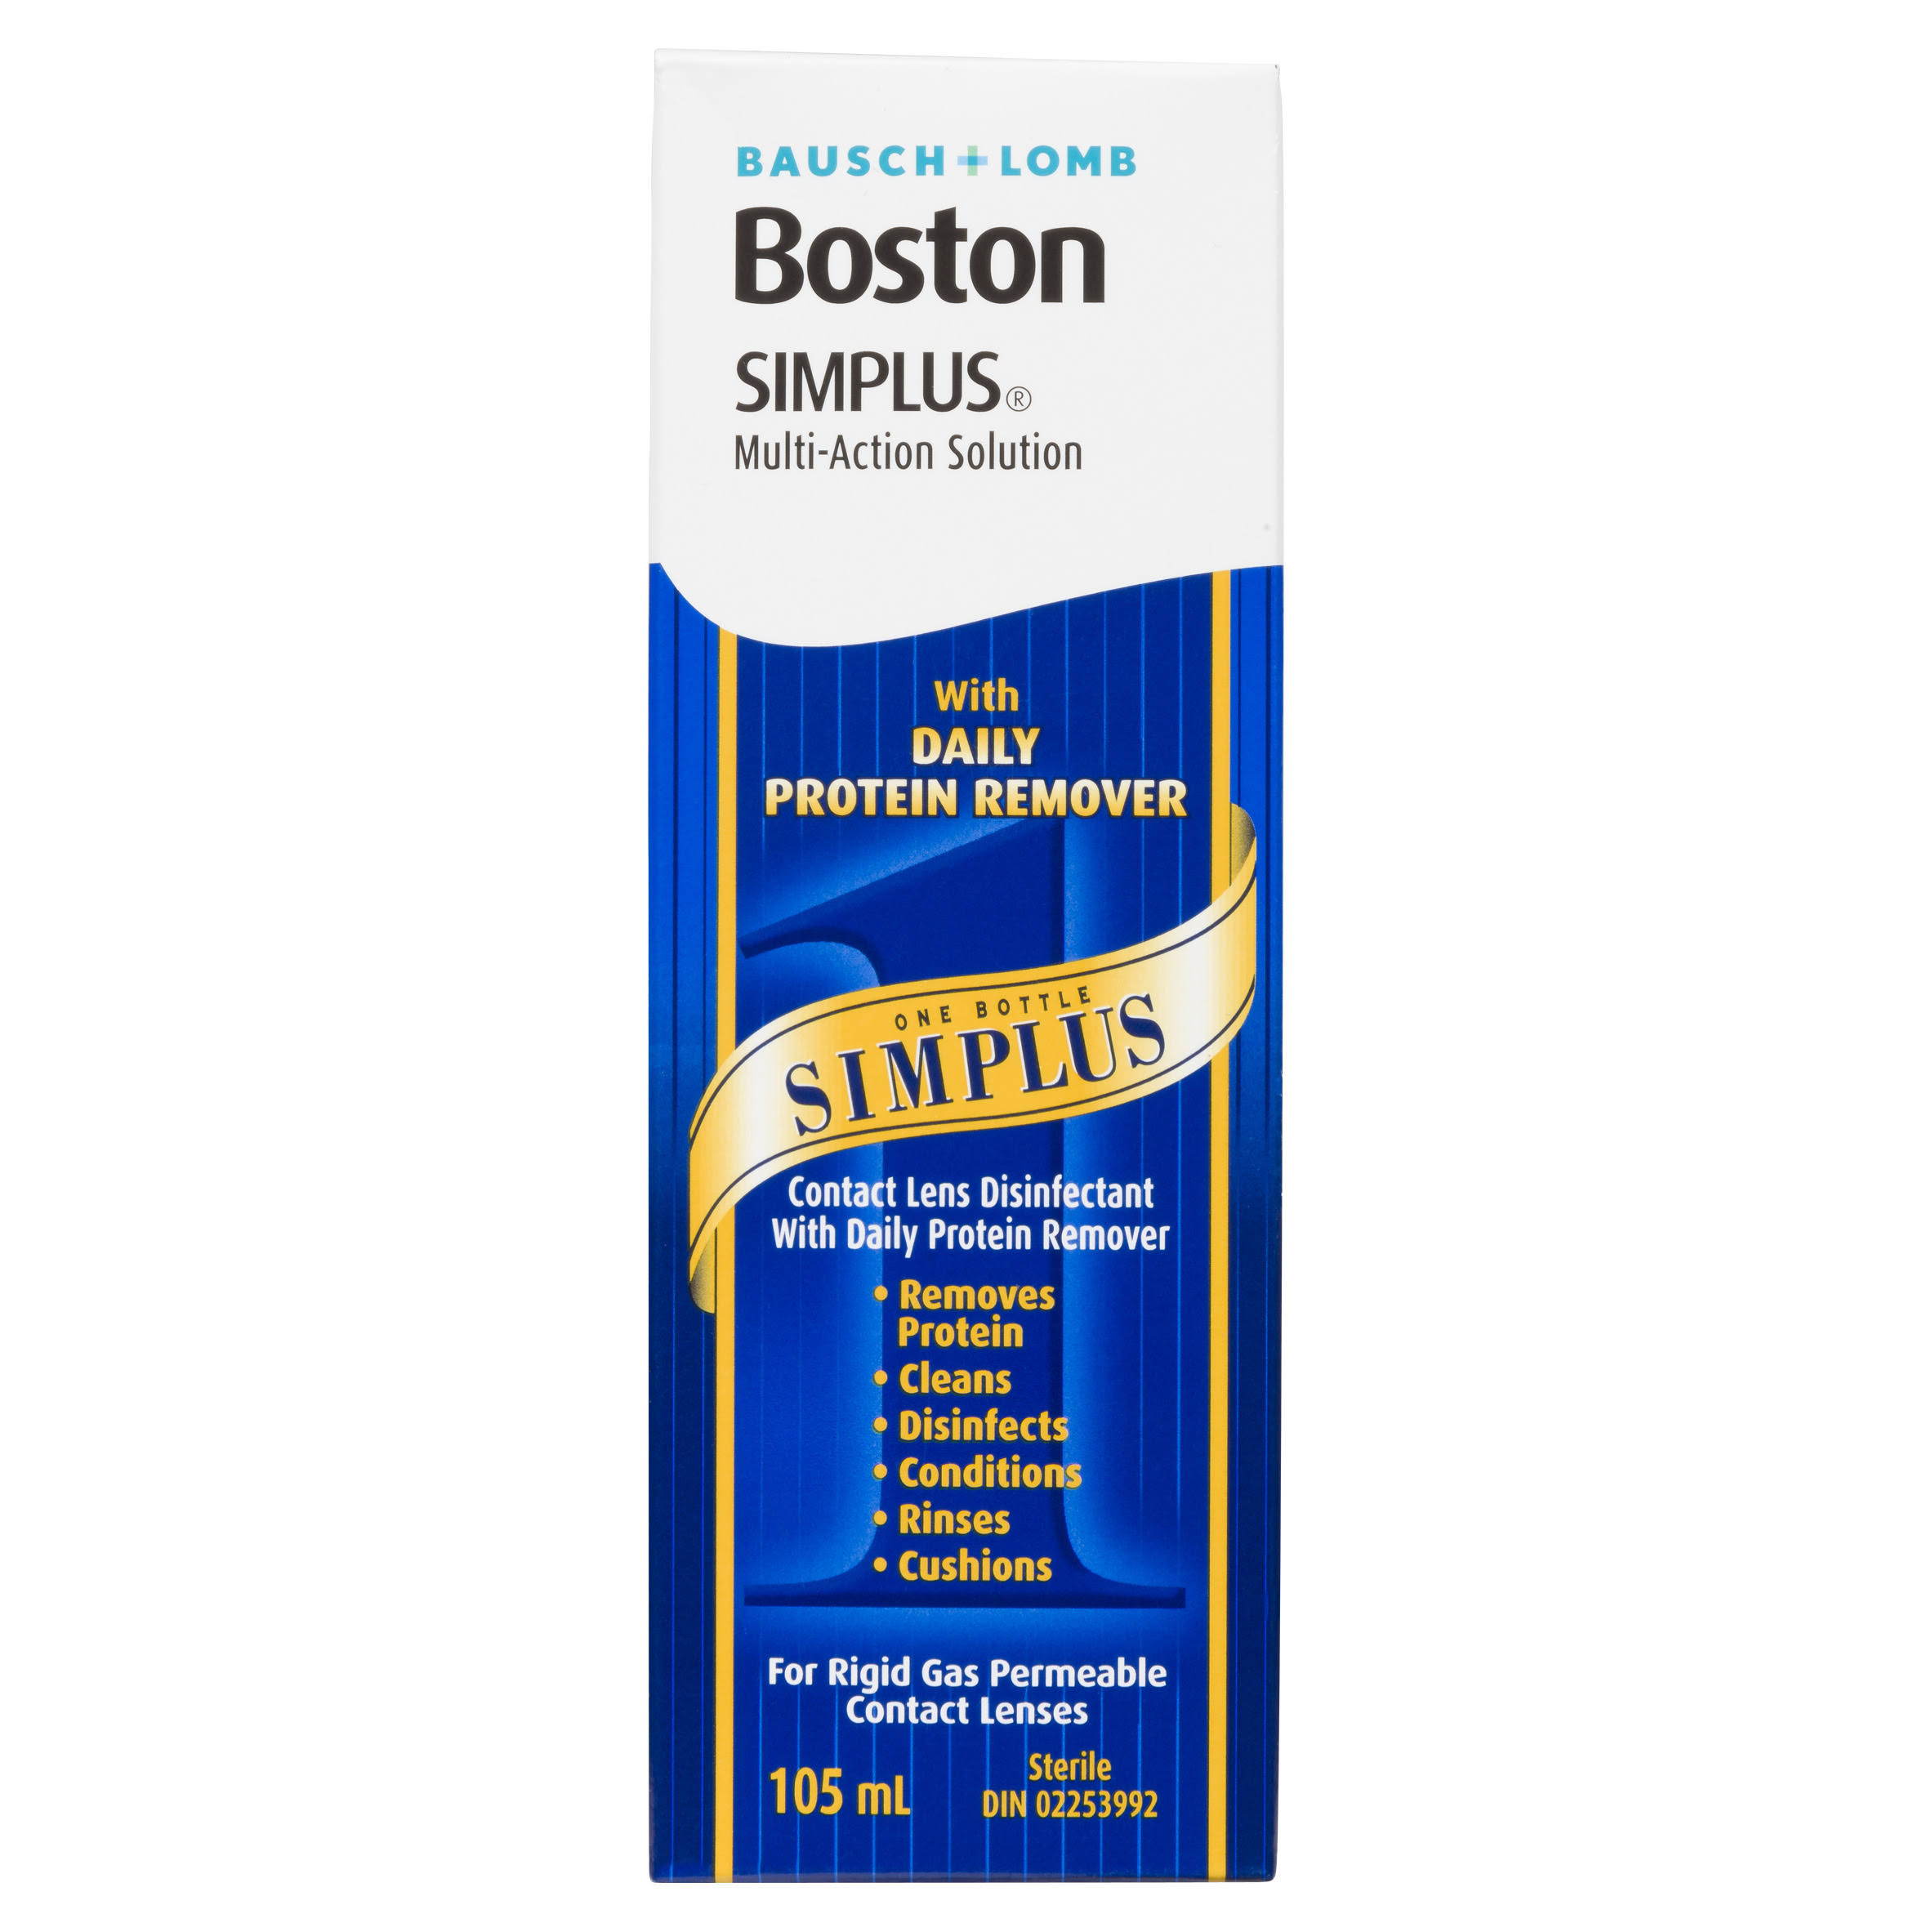 Bausch & Lomb Boston Simplus Multi-action Solution - 105ml